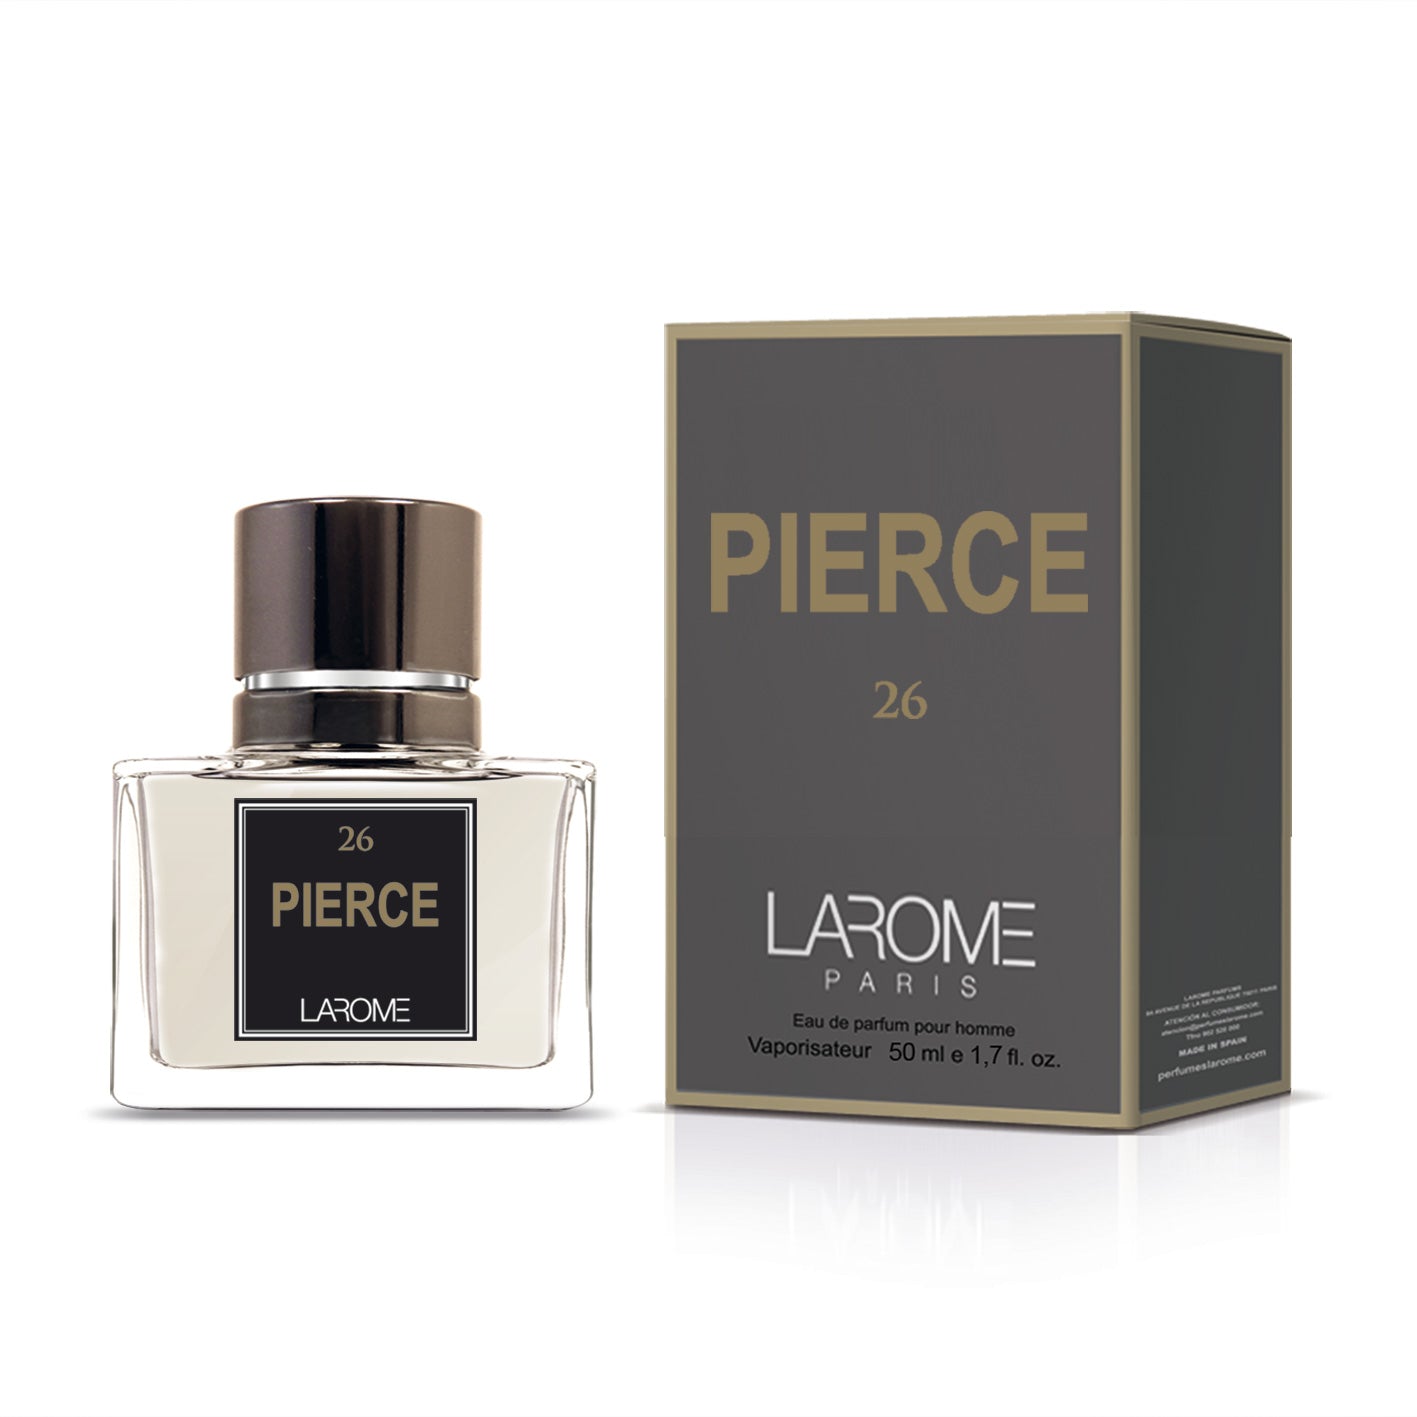 Pierce 26M by Larome geïnspireerd door Fierce Cologne